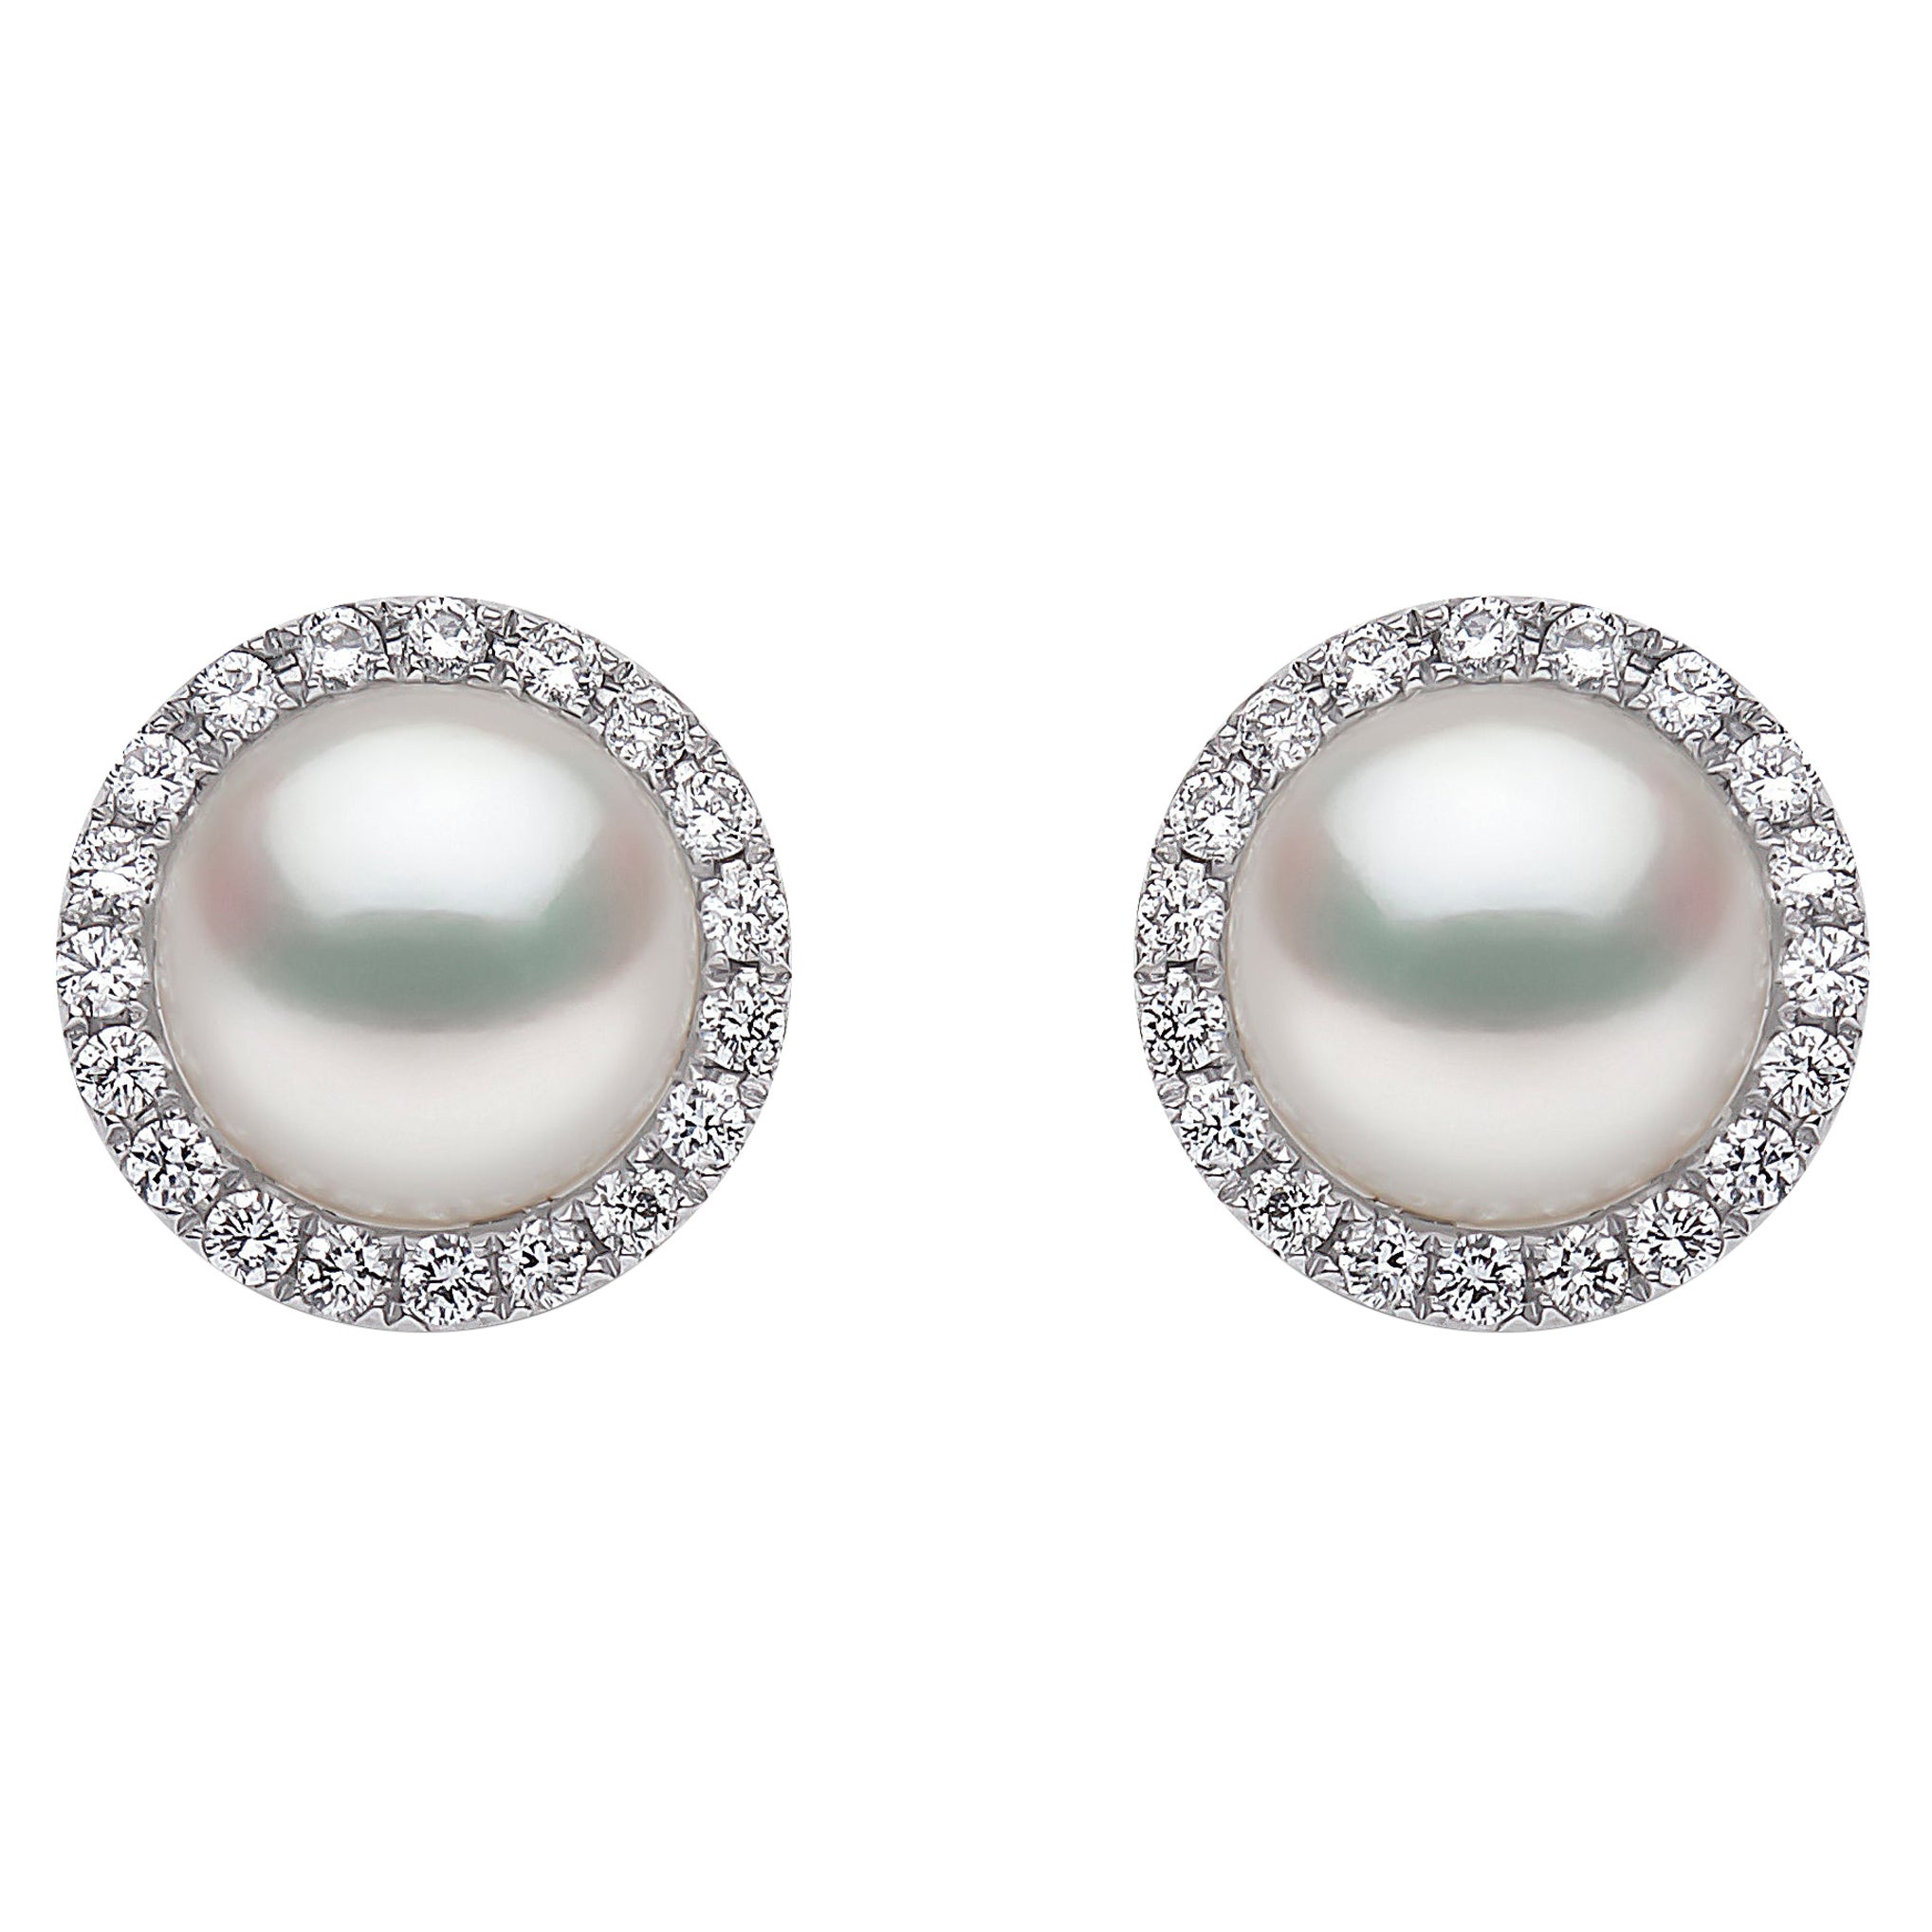 Yoko London Freshwater Pearl and Diamond Earrings in 18K White Gold